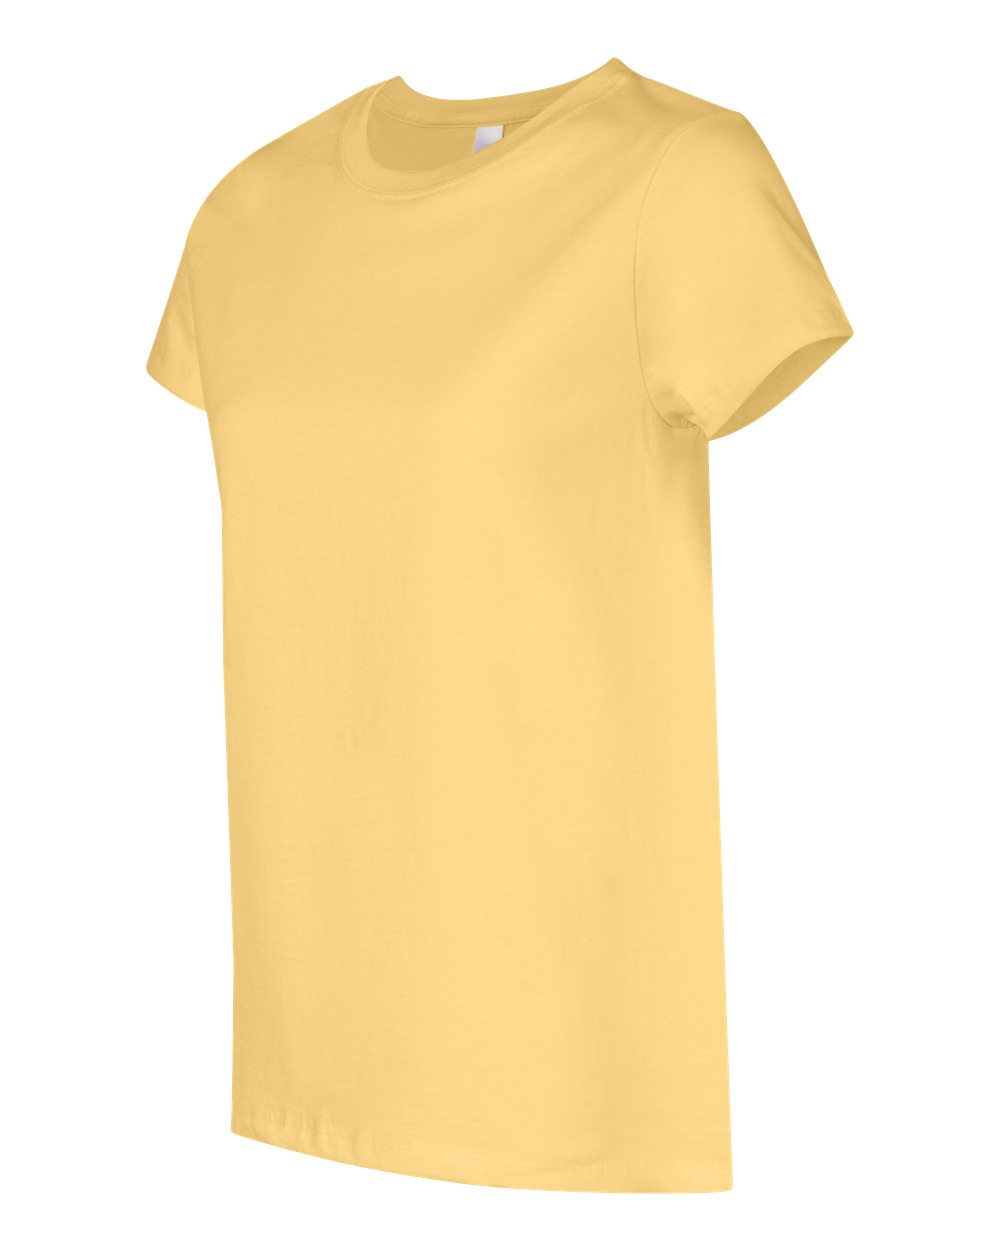 Hanes 5680 - Ladies' ComfortSoft T-Shirt